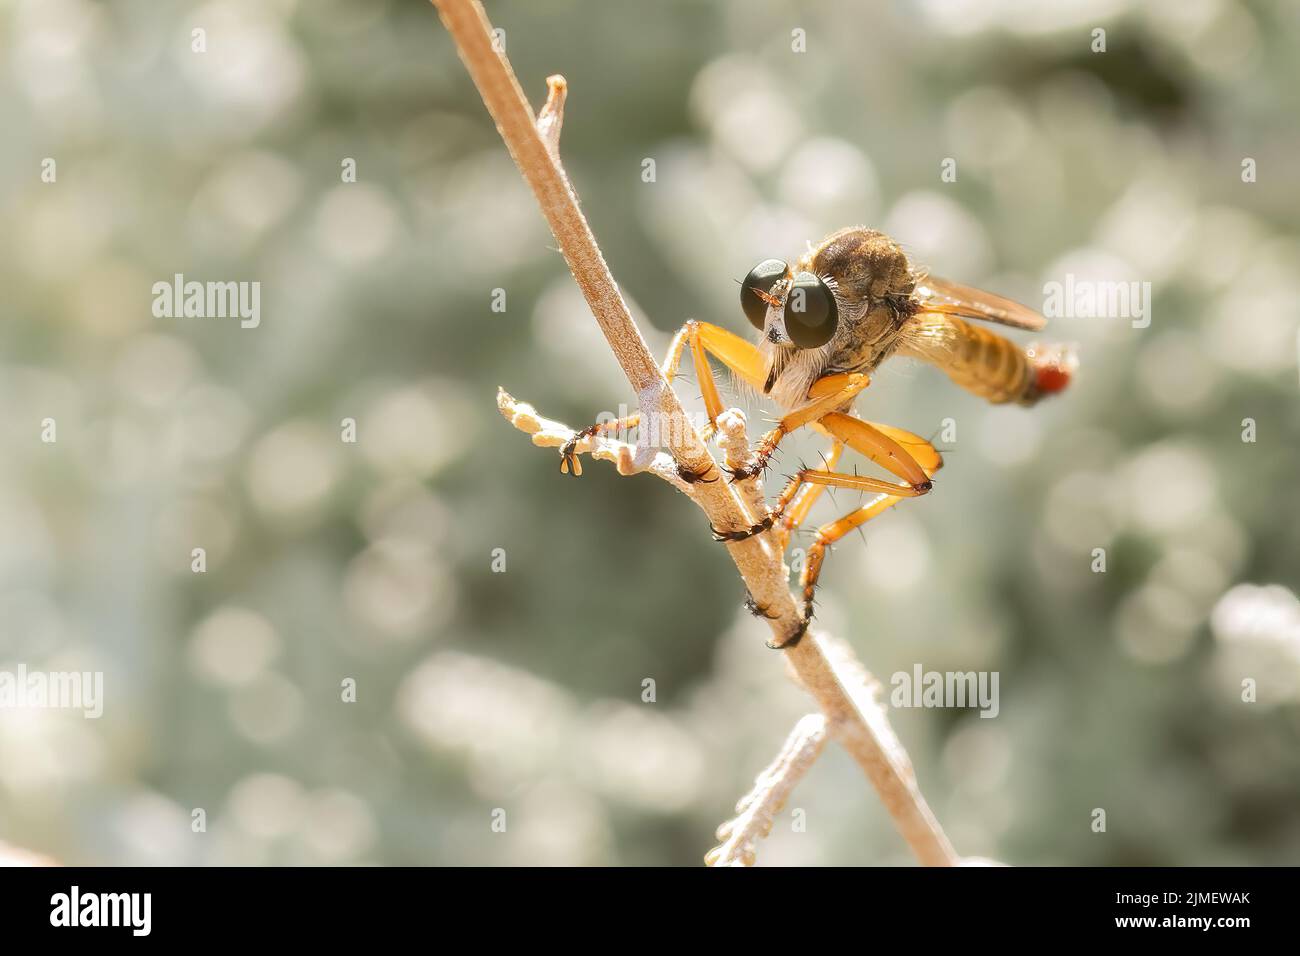 Macro photo of a fly bug. Parasite animal on a plant. Stock Photo